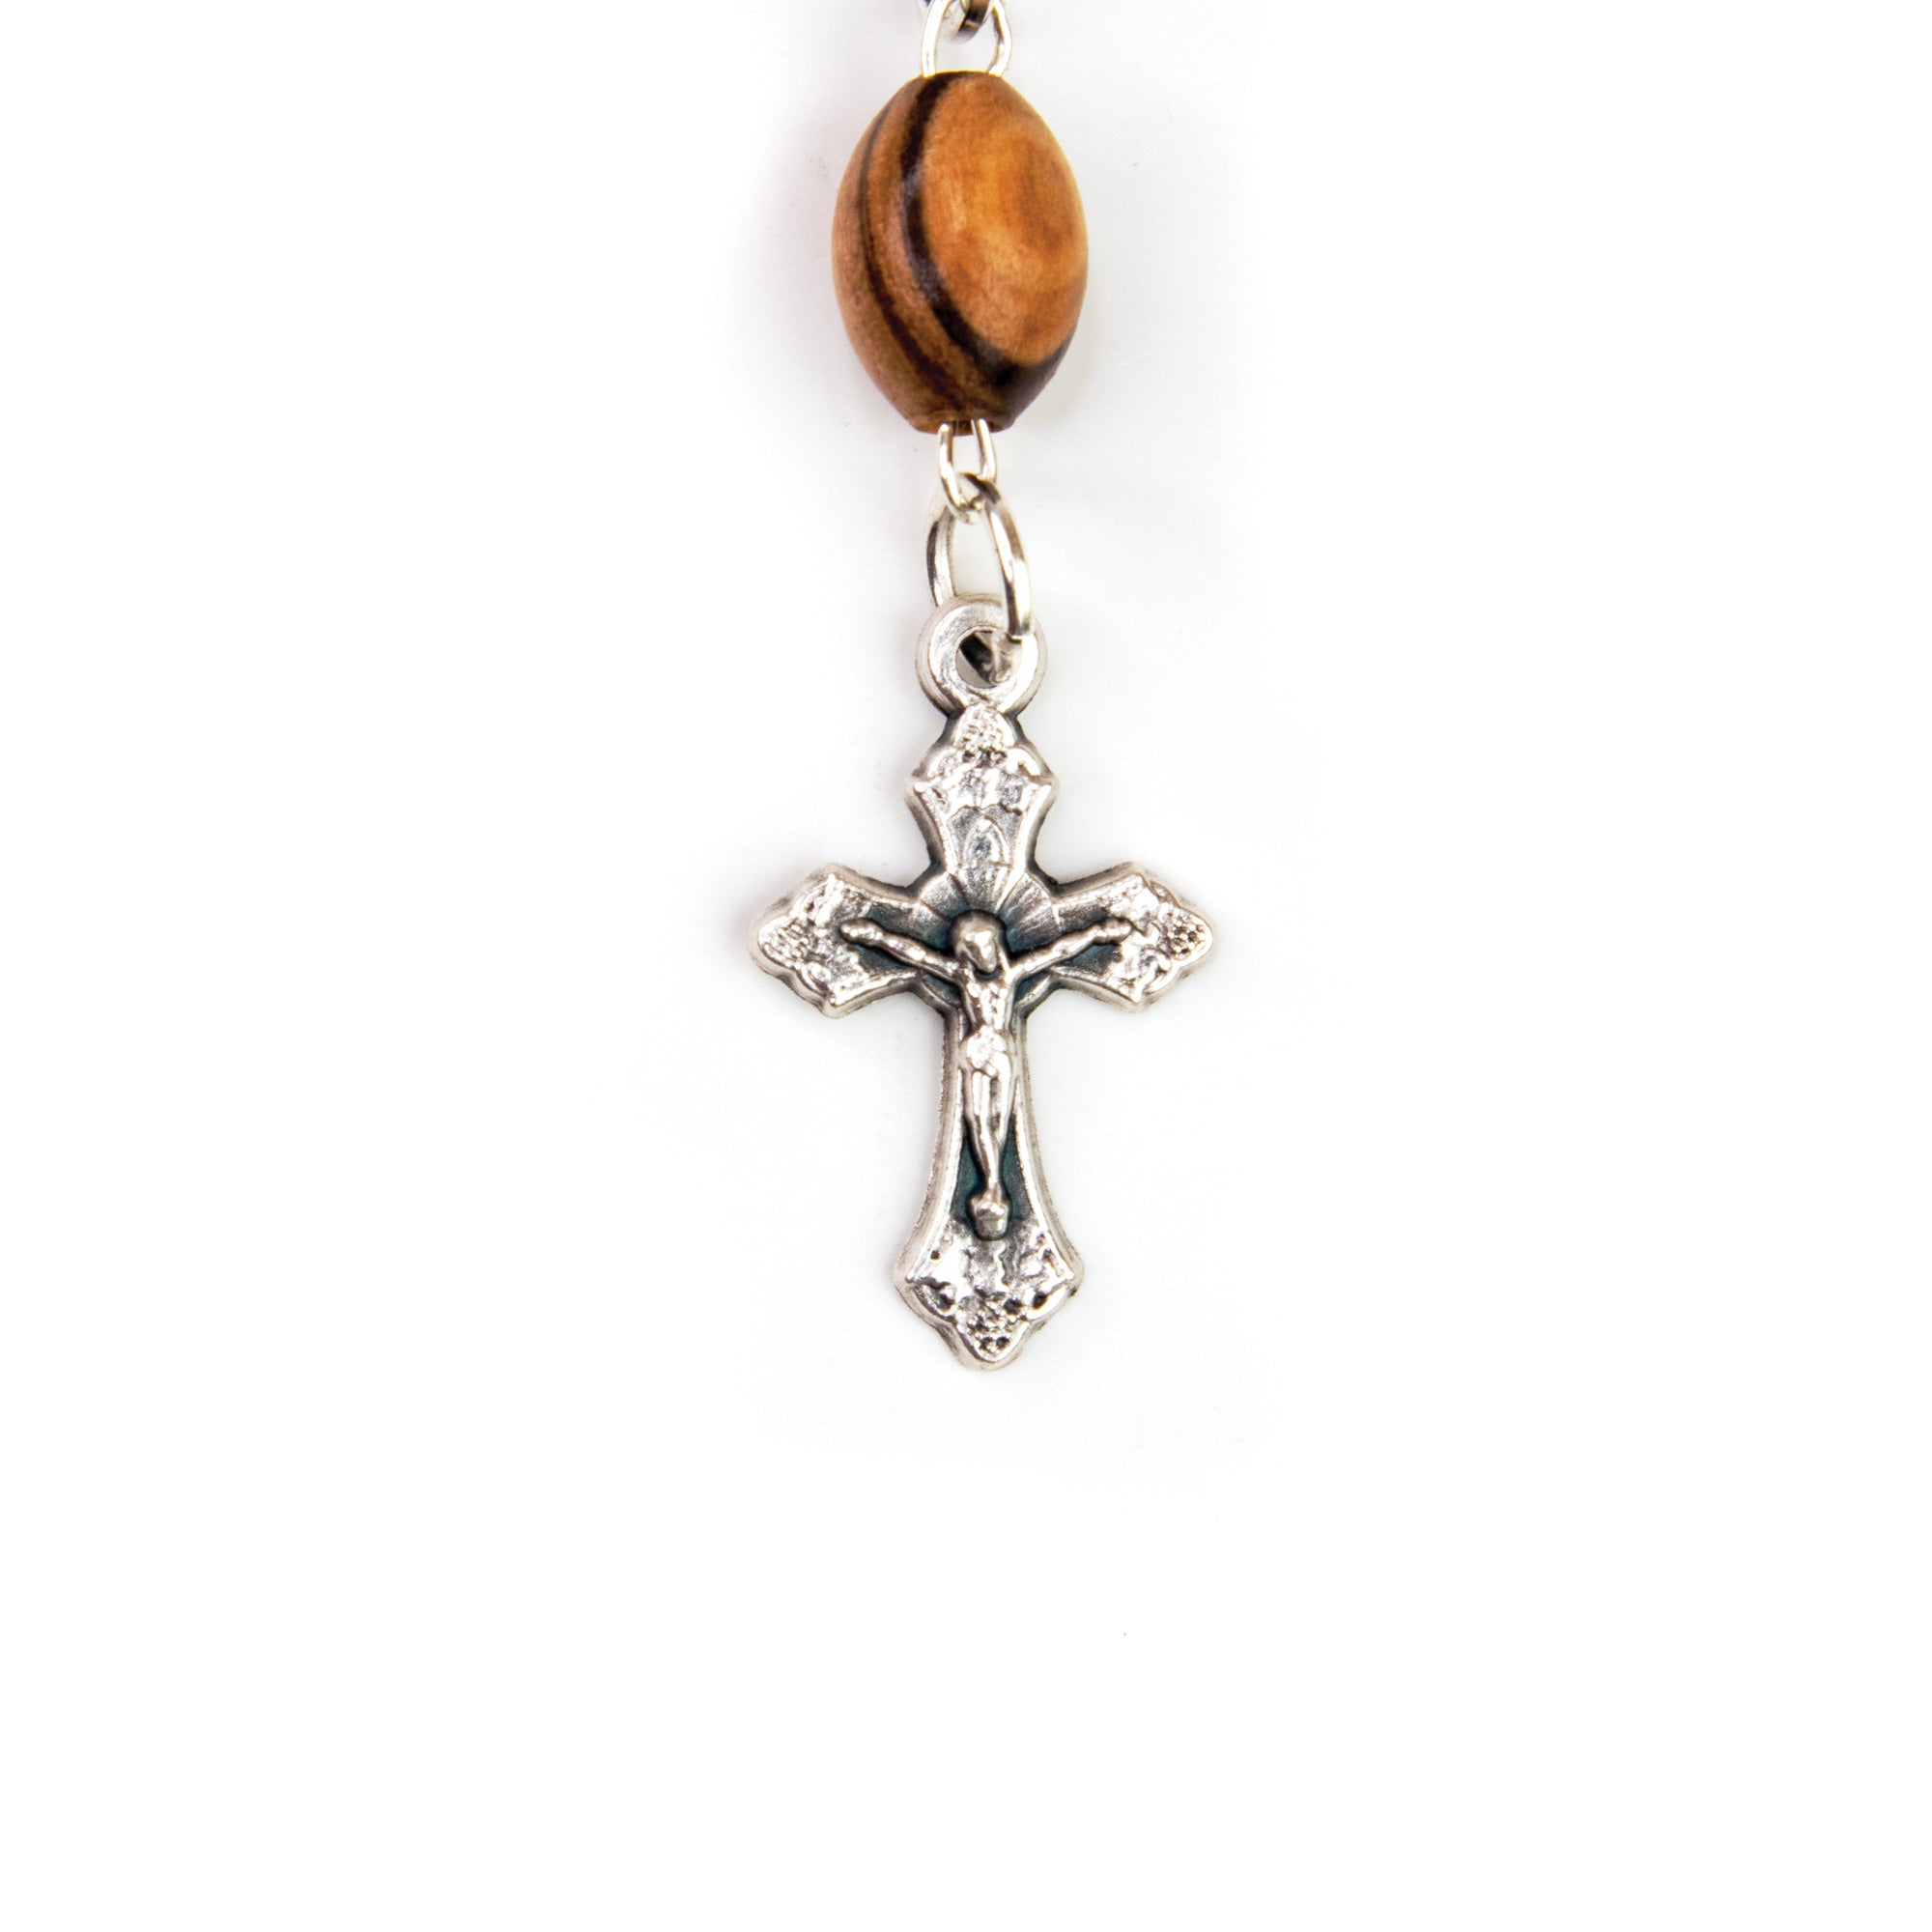 Virgin Mary Help of Christians, Holy Land Olive Wood Pocket Auto Rosary, Made in Bethlehem